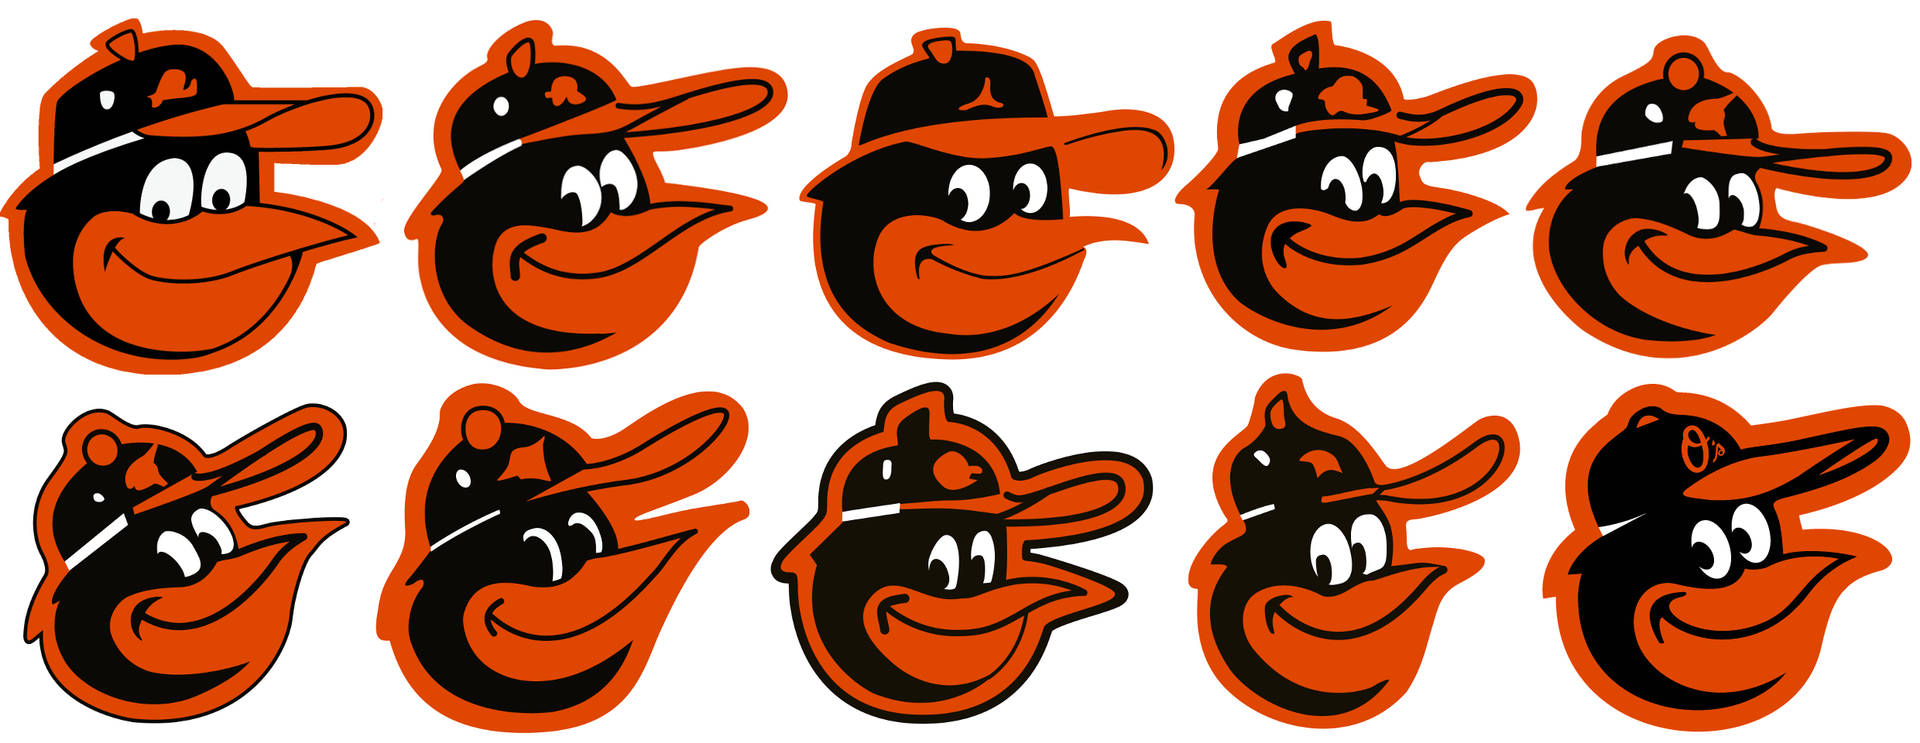 Baltimore Orioles Fugle Hoved Logos. Wallpaper